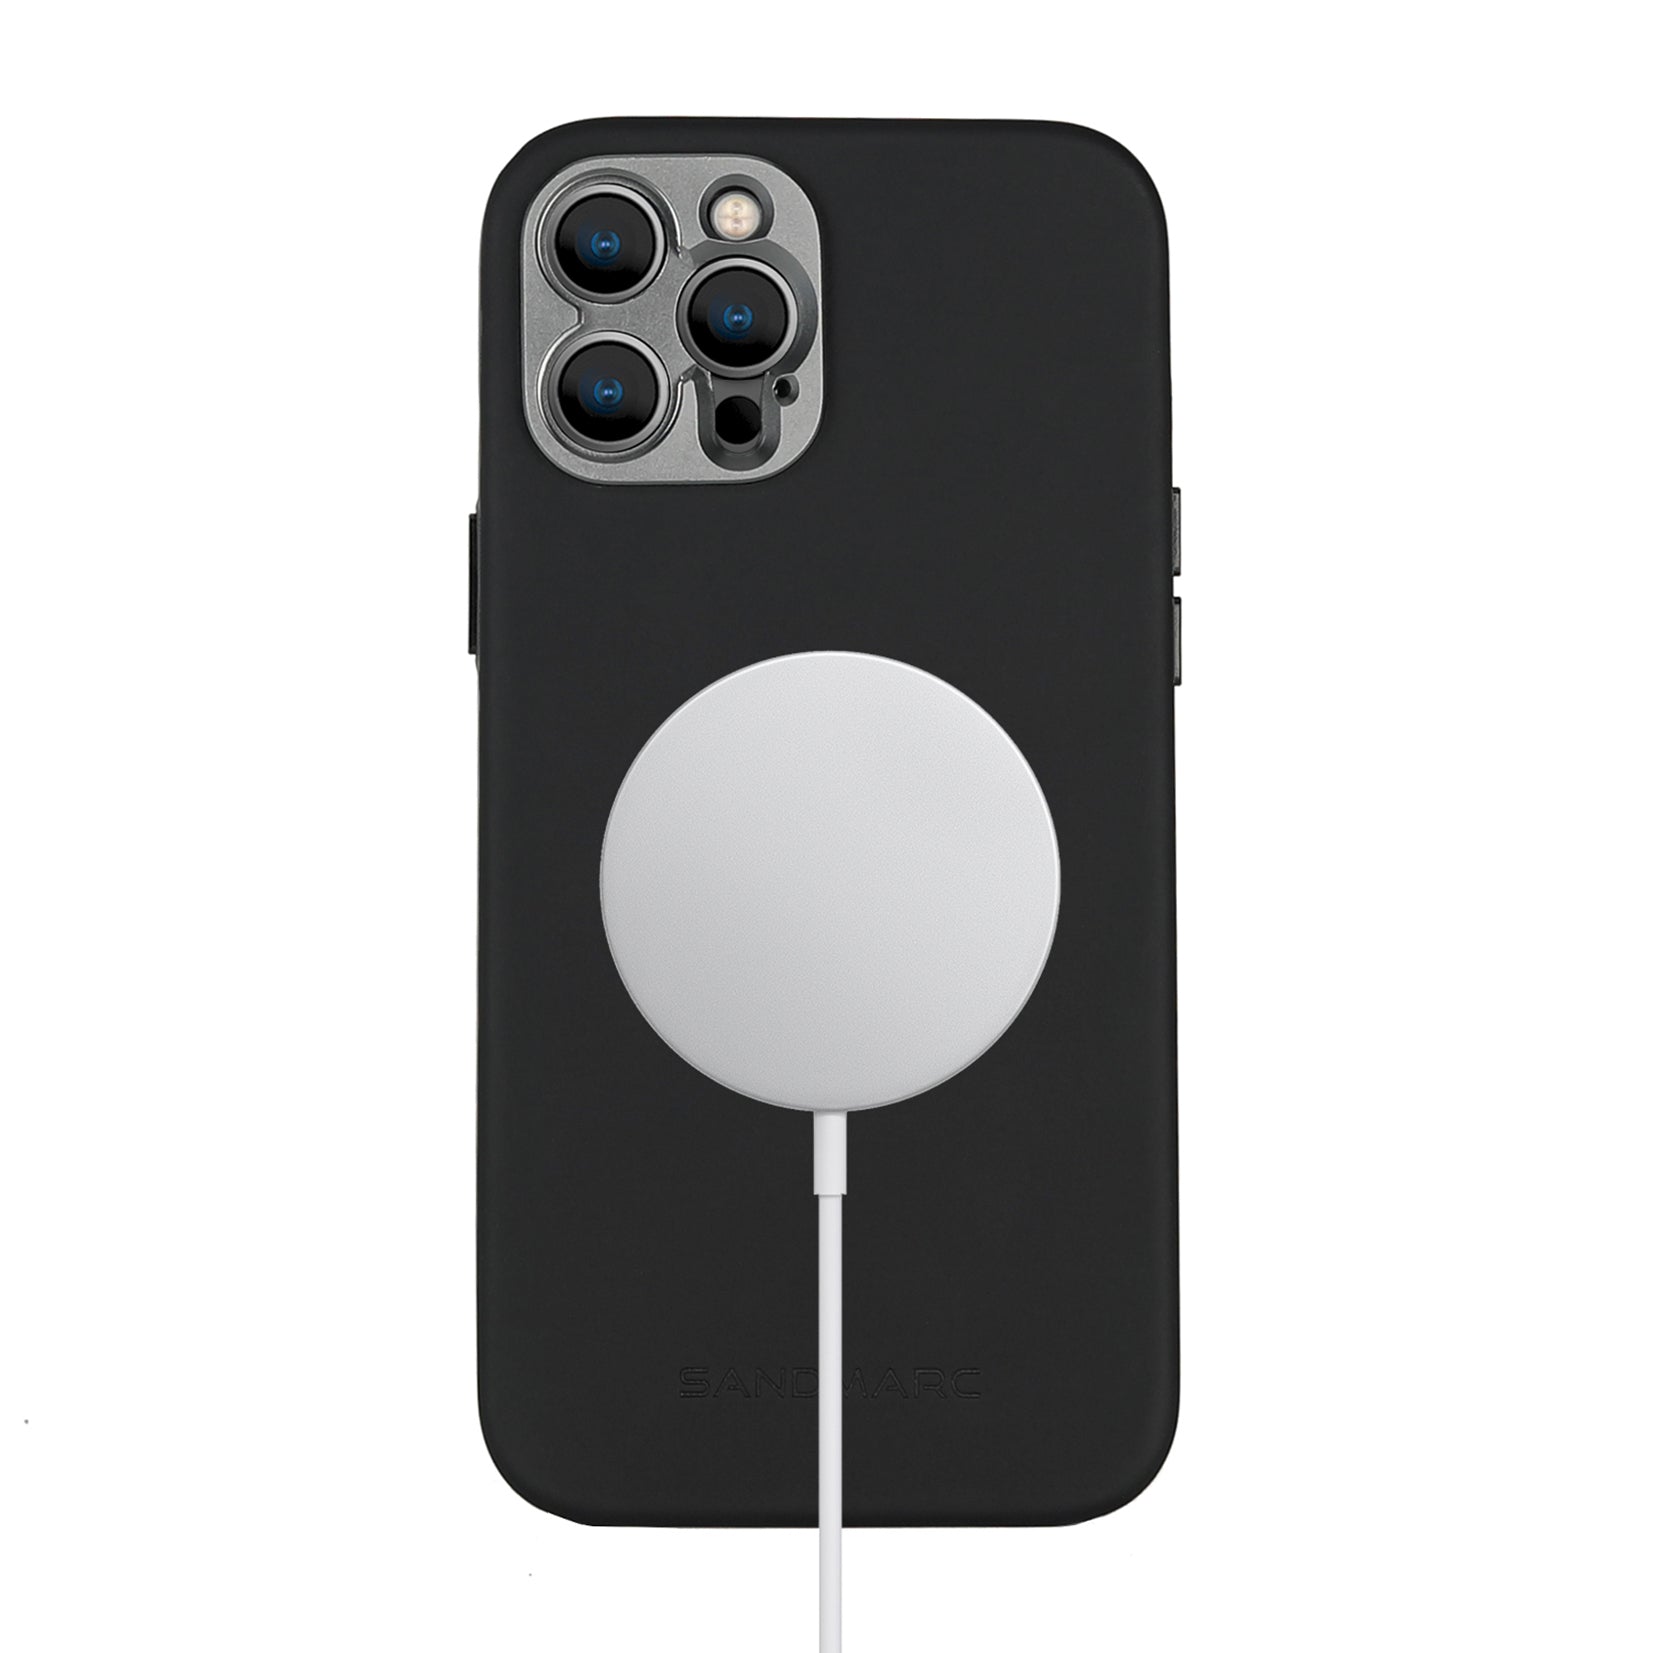 Pro Case - iPhone 12 Pro Max (Magnet Enabled) | SANDMARC